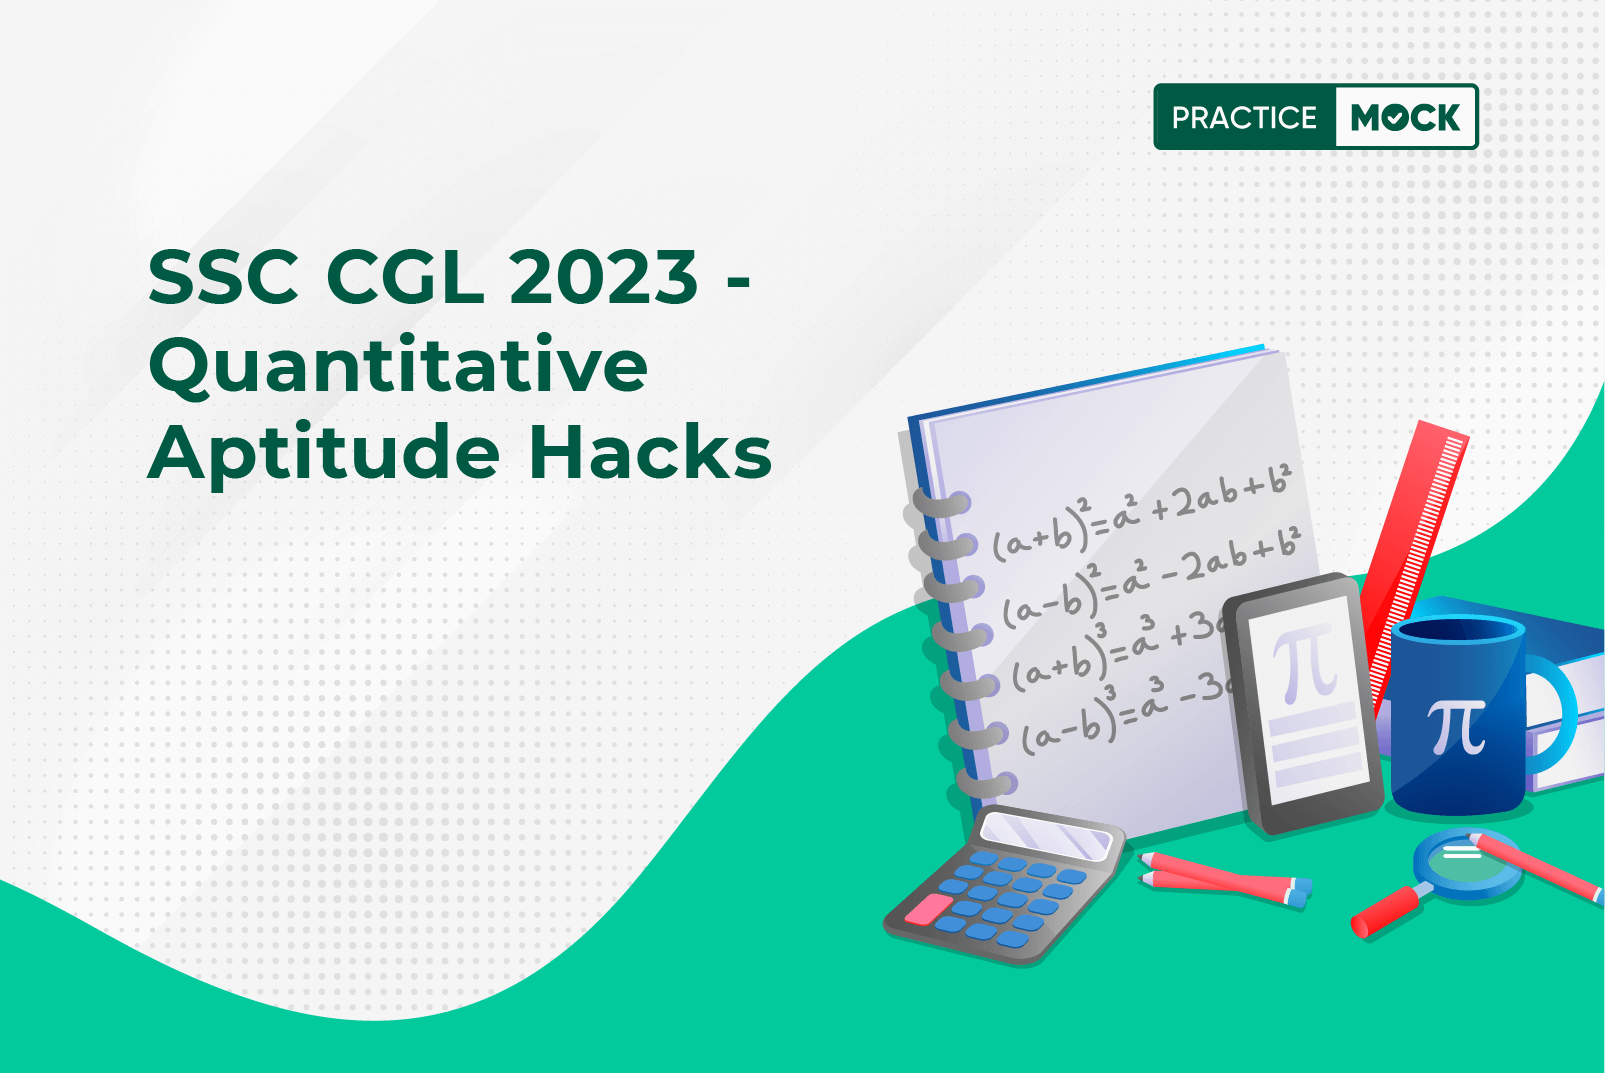 SSC CGL 2023 Quantitative Aptitude Hacks PracticeMock